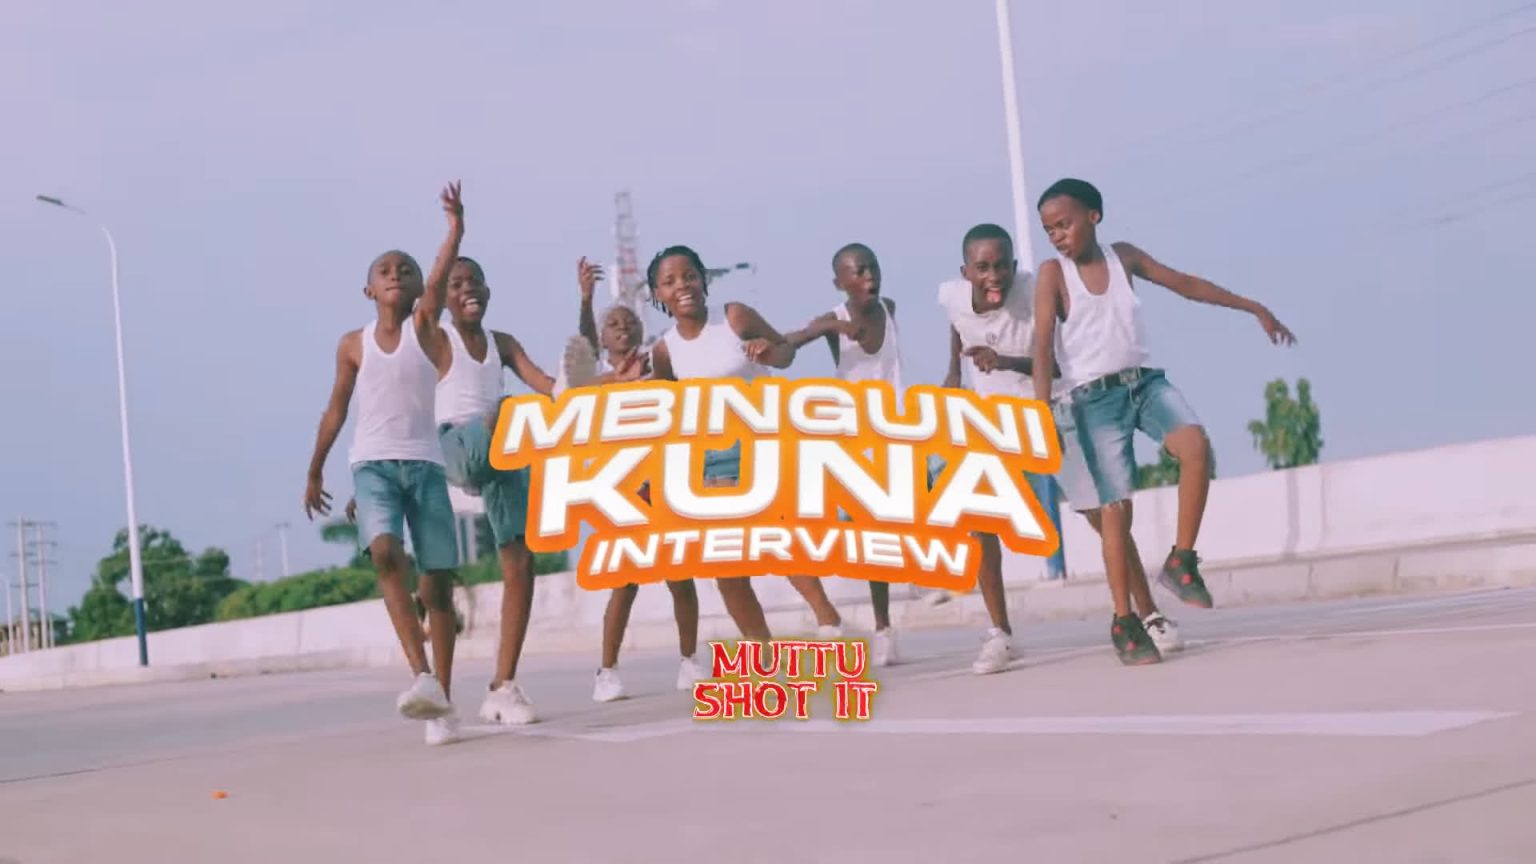  RaniPol MC – Mbinguni kuna Interview